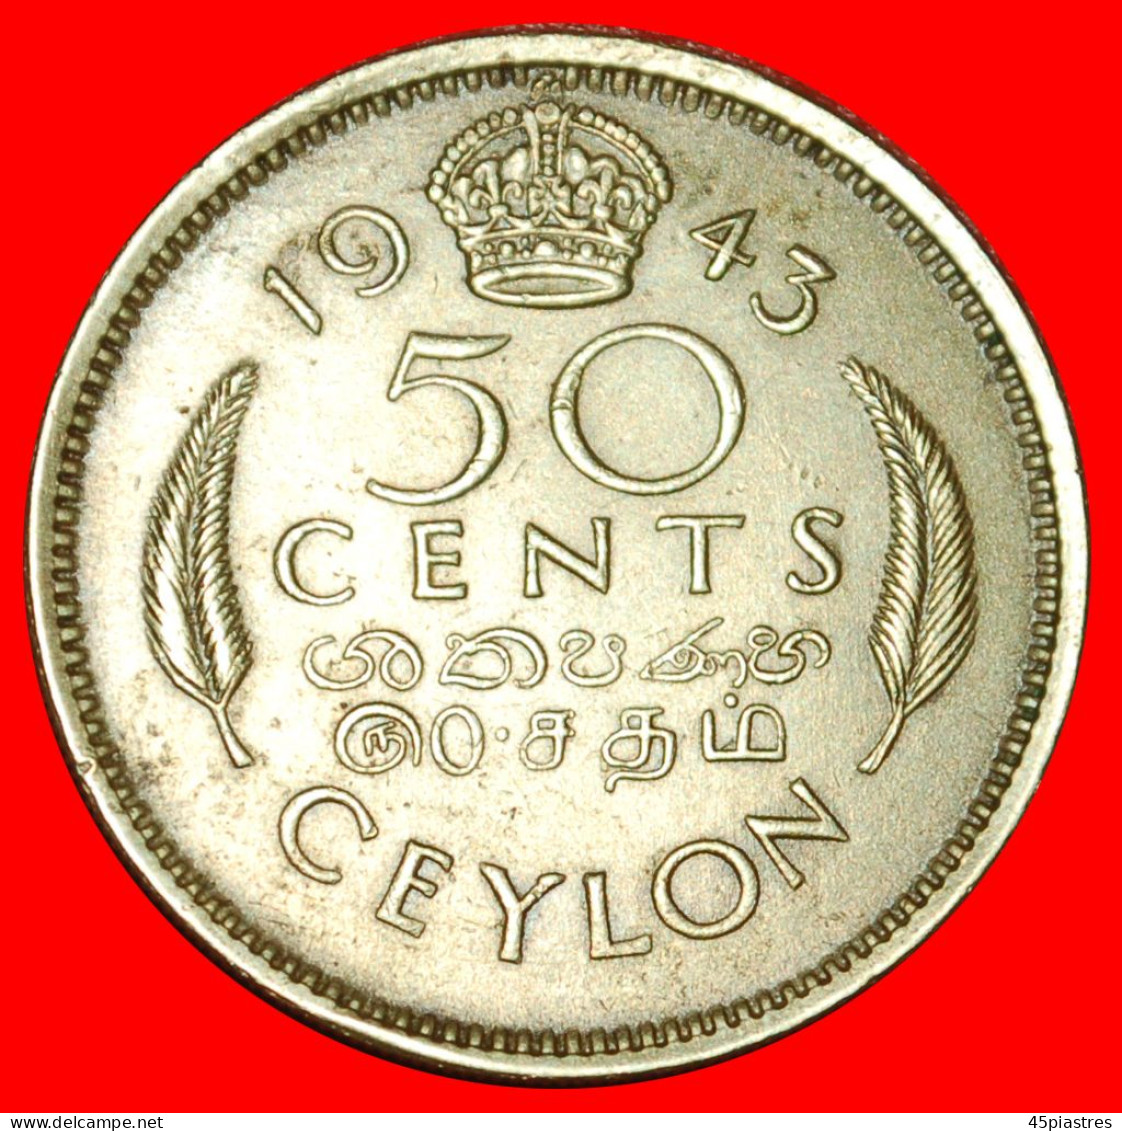 * INDIA: CEYLON  50 CENTS 1943! SECURITY EDGE GEORGE VI (1937-1952)! · LOW START ·  NO RESERVE! - Sri Lanka